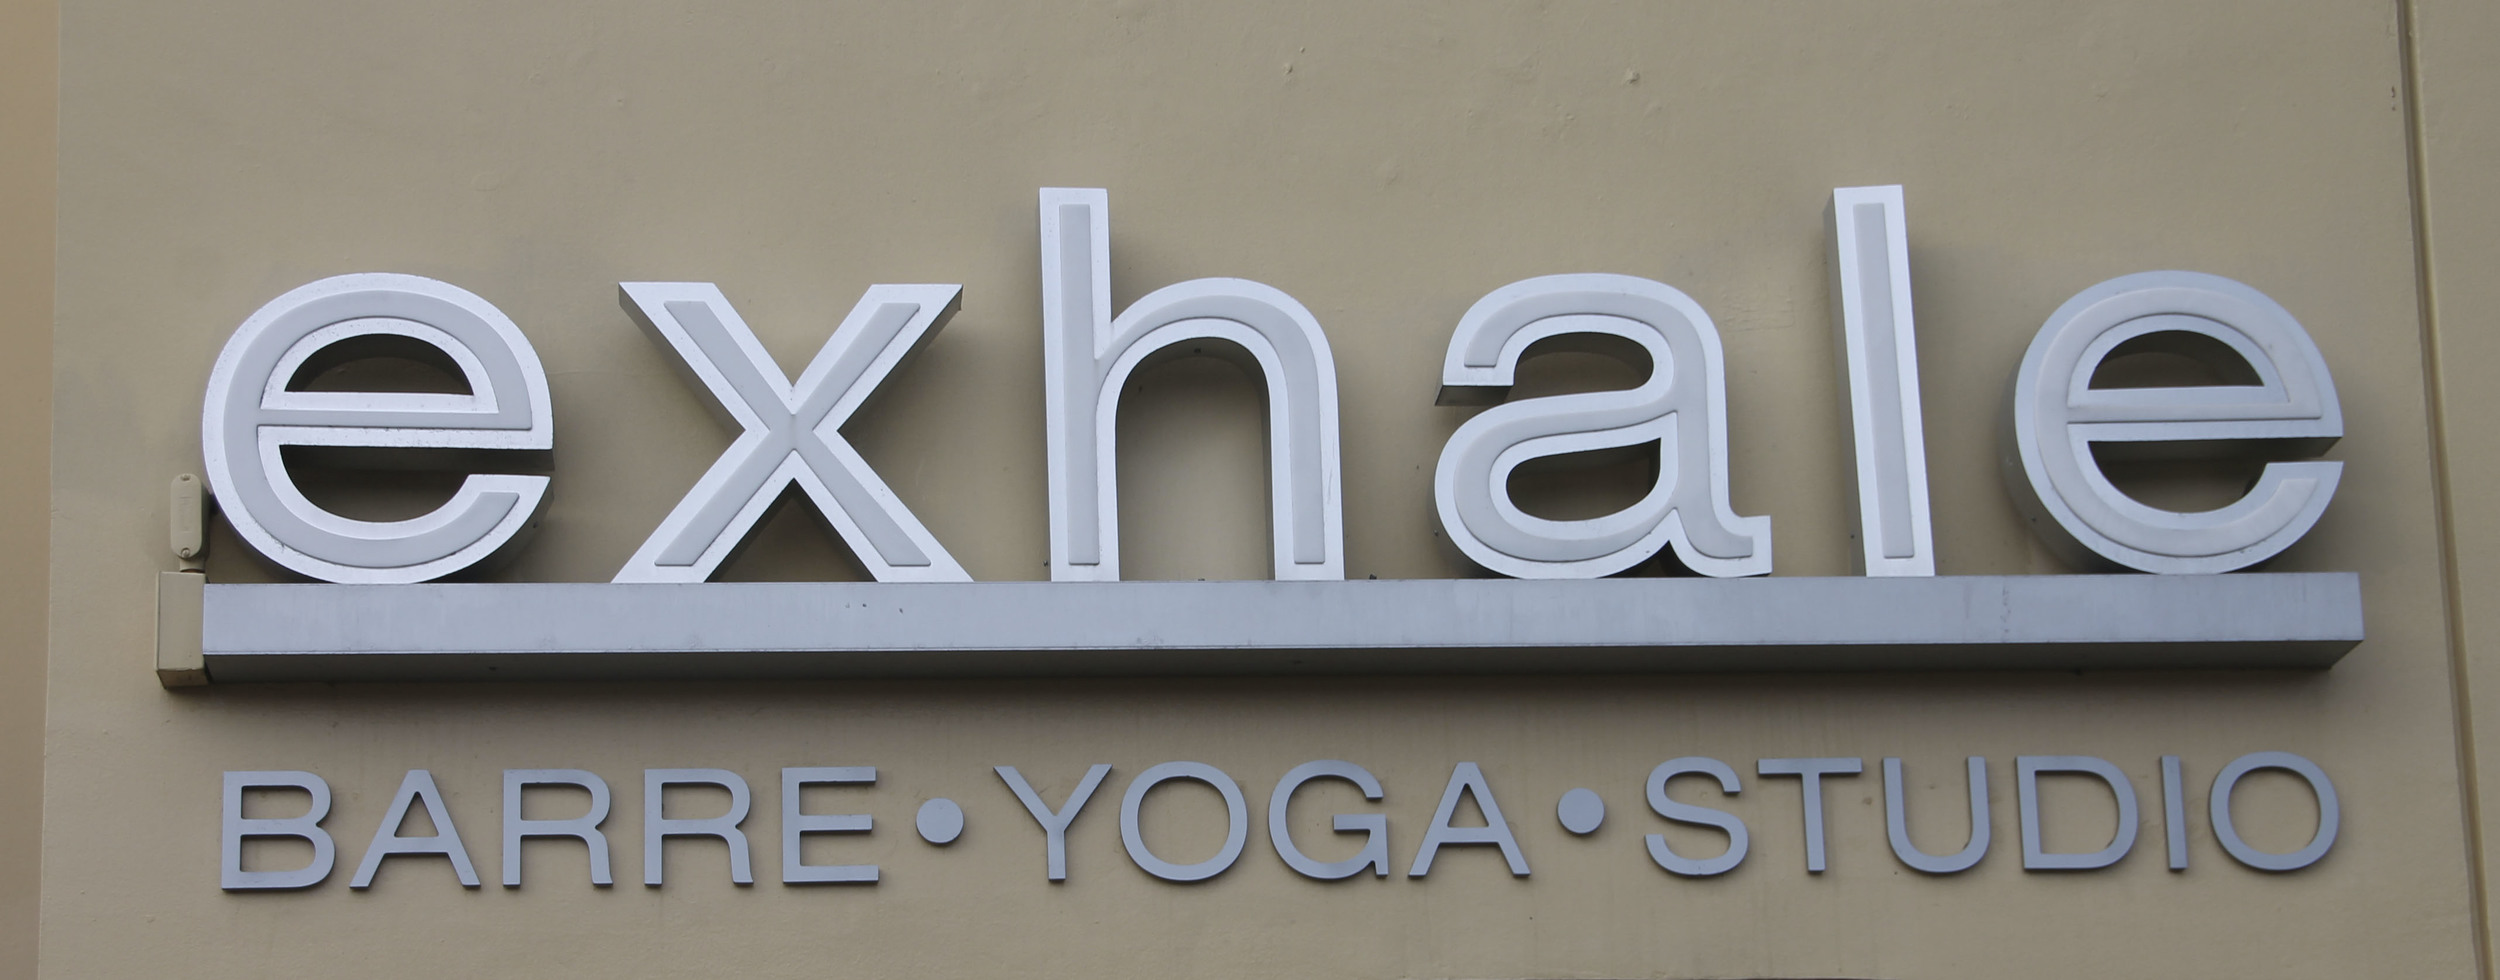 Exhale Yoga Spa Studio Venice California2486.jpg